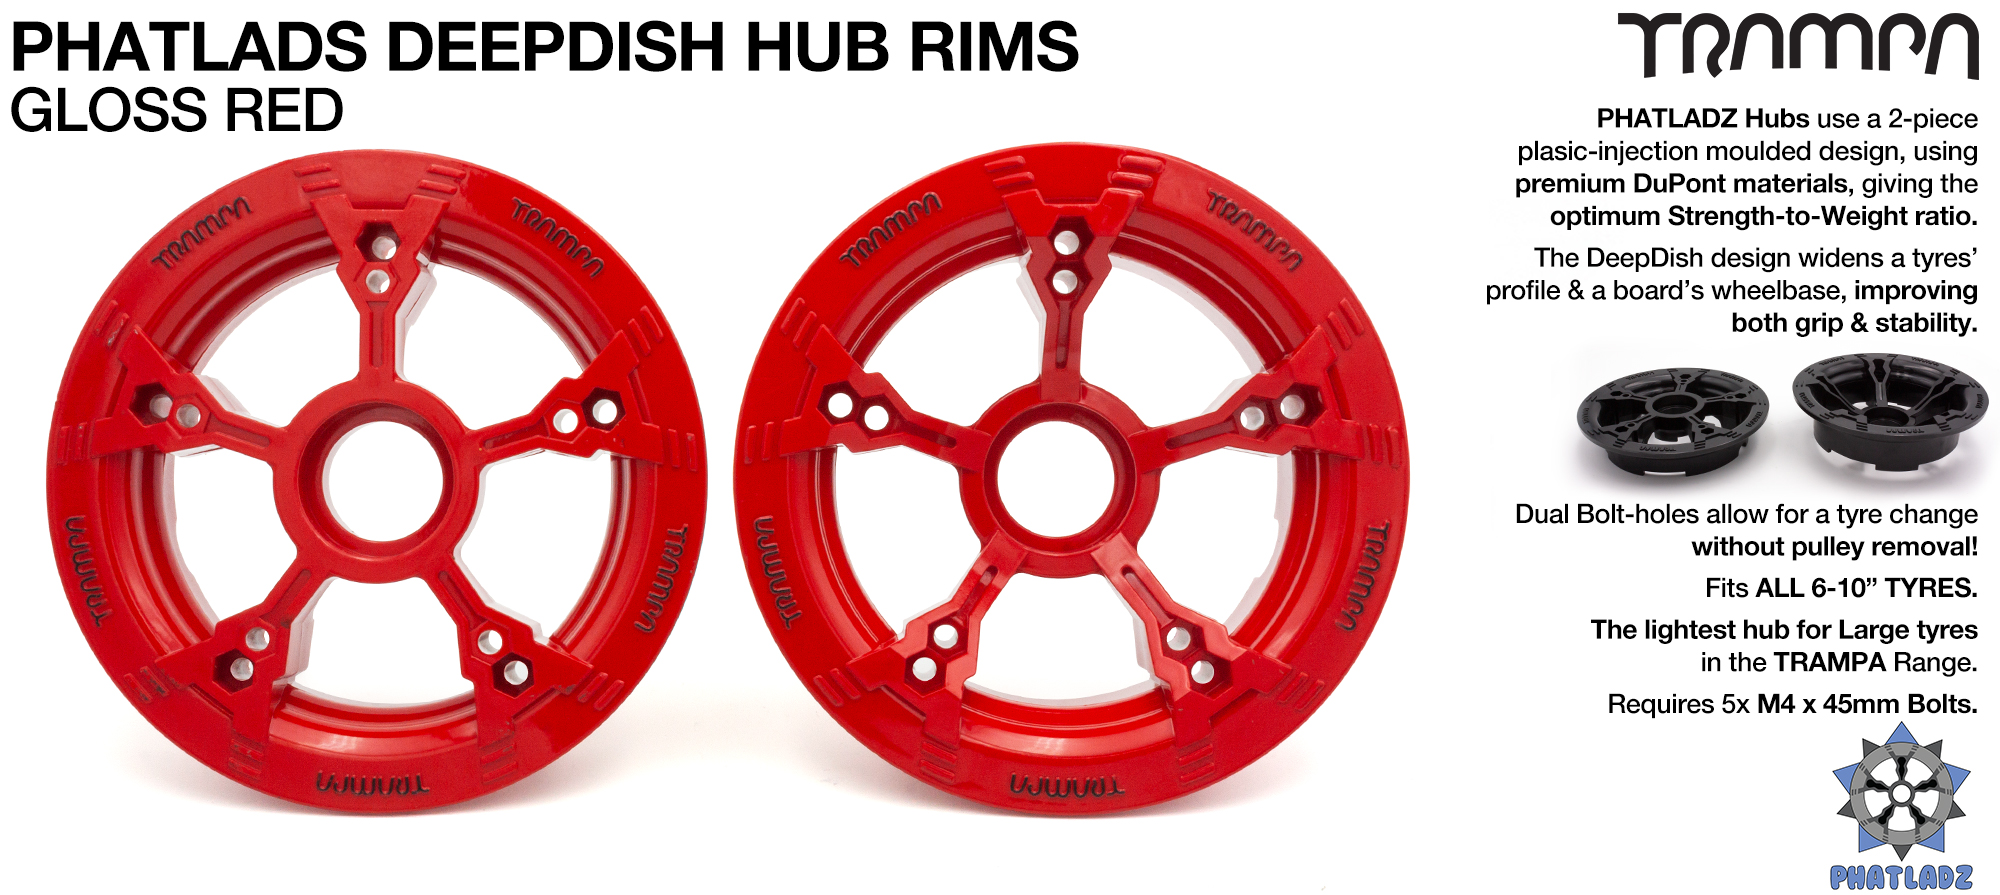 PHATLADS - 5 Spoke Hub Deep Dish Split Rim hub natural RED with Black Logo fits 6,7,8,9 & 10 Inch tyres!! Amazing - NO BOLTS 